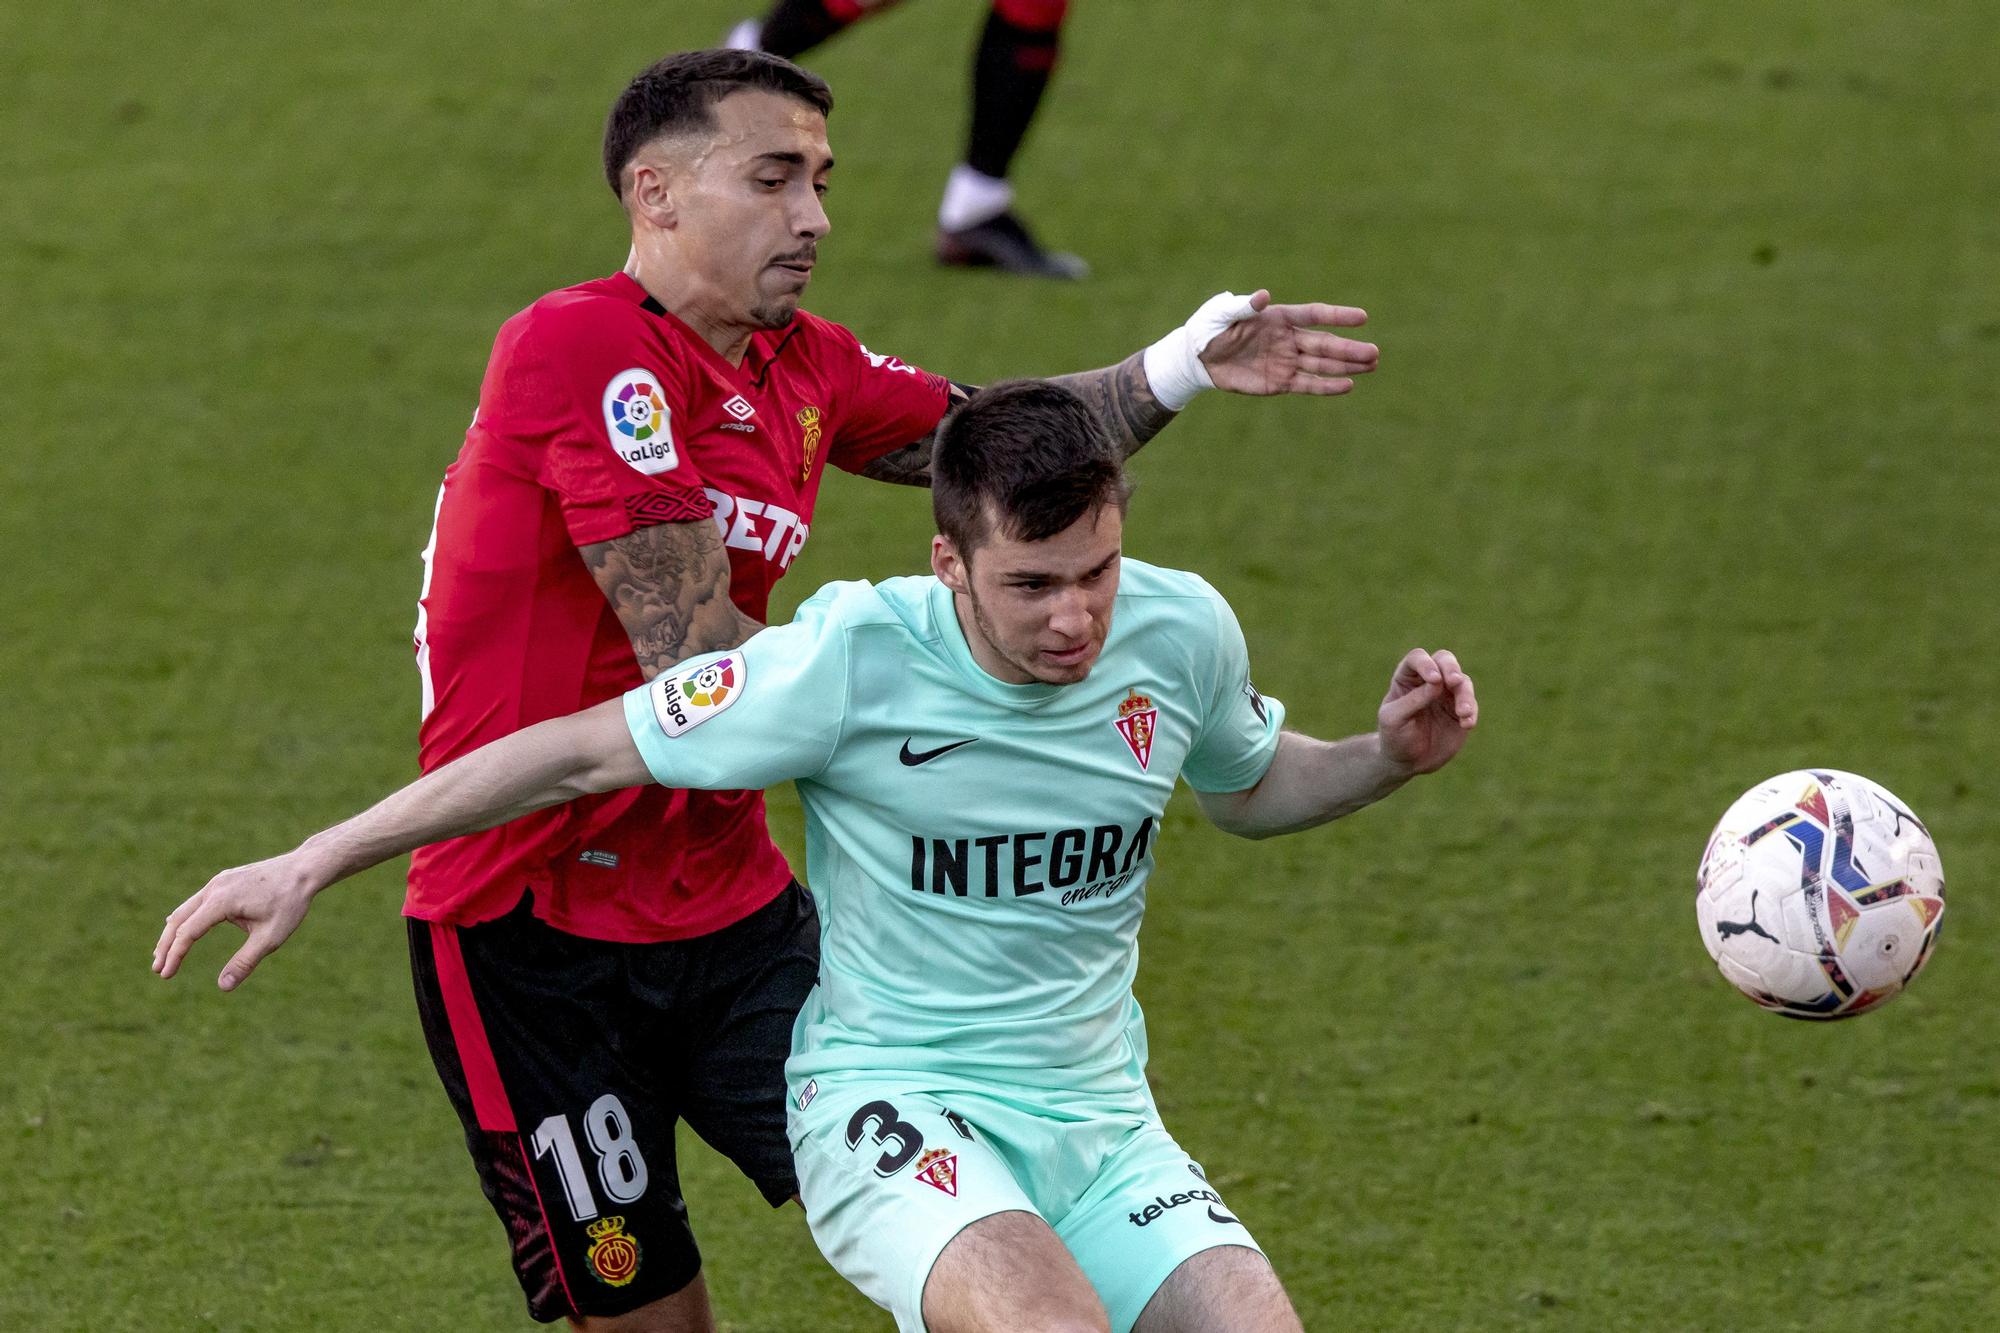 El Mallorca da por bueno el empate frente al Sporting